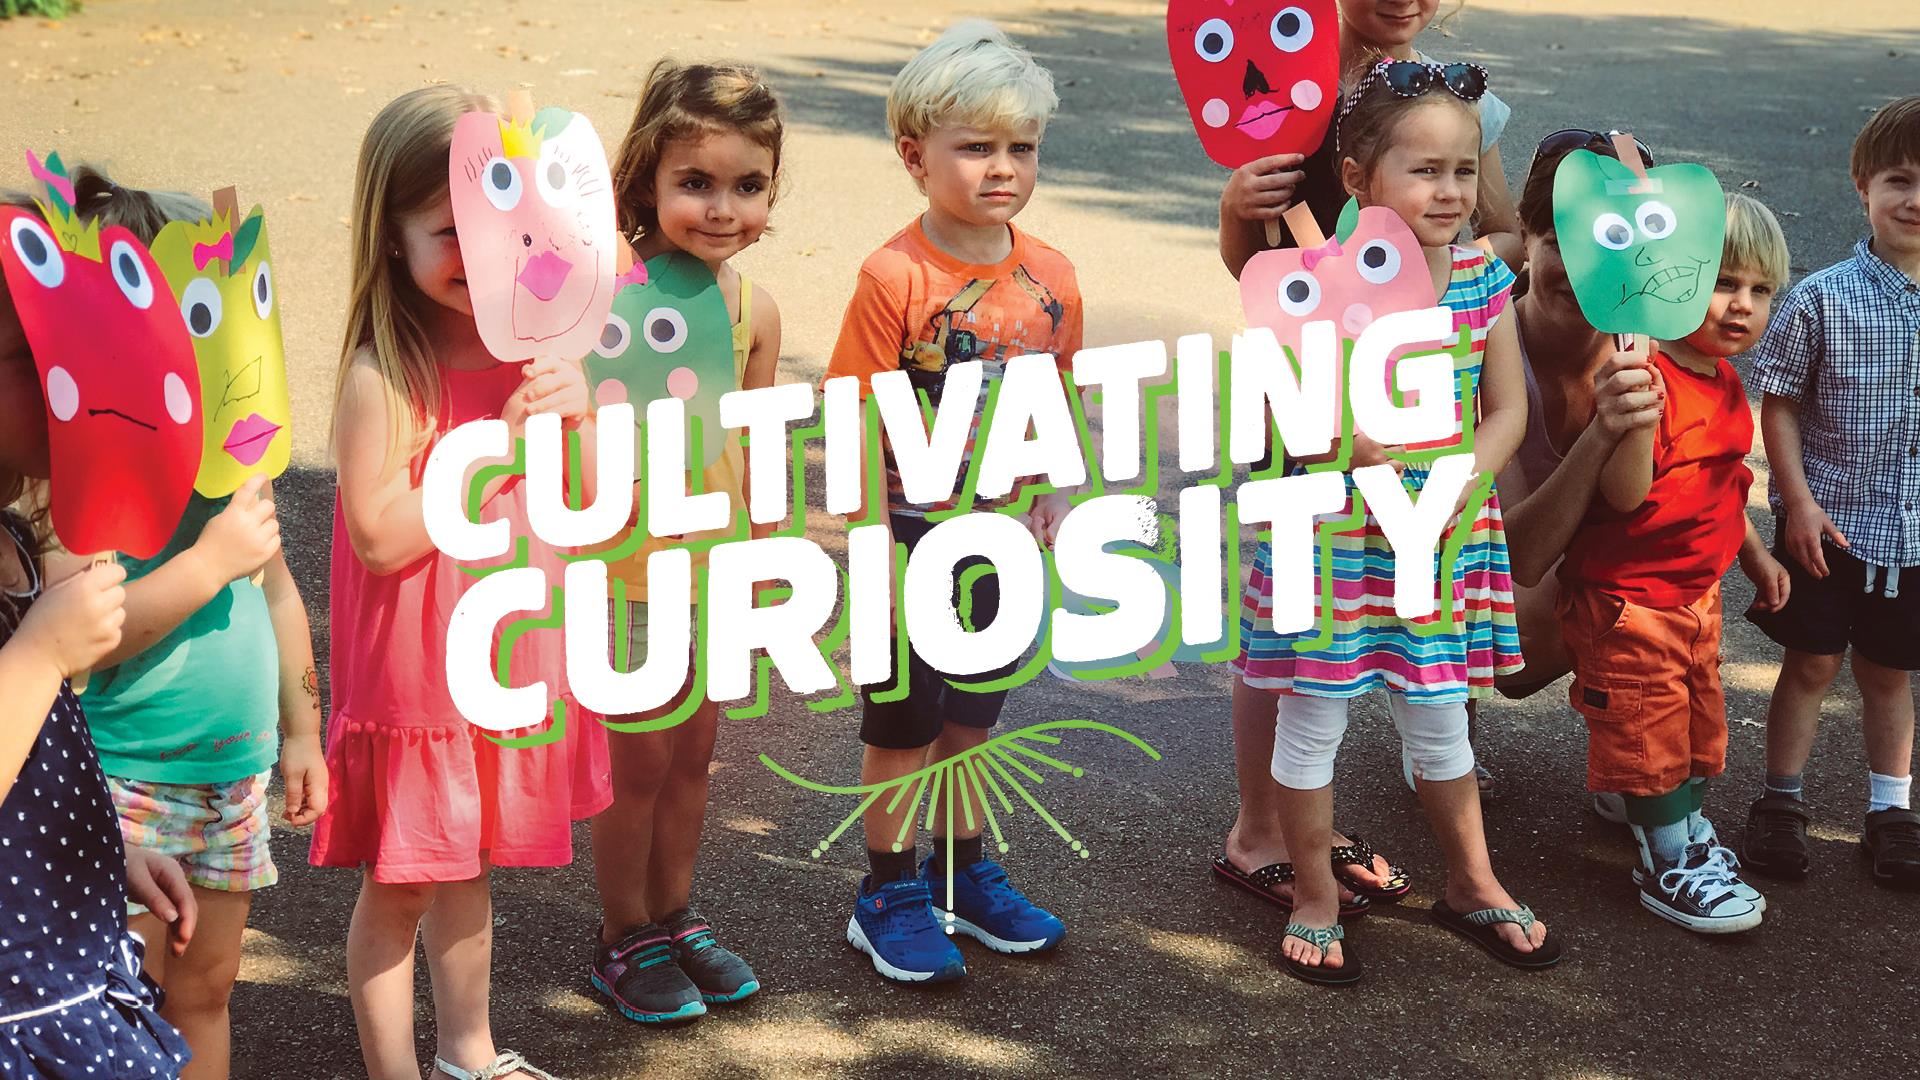 Cultivating Curiosity kids event 2018